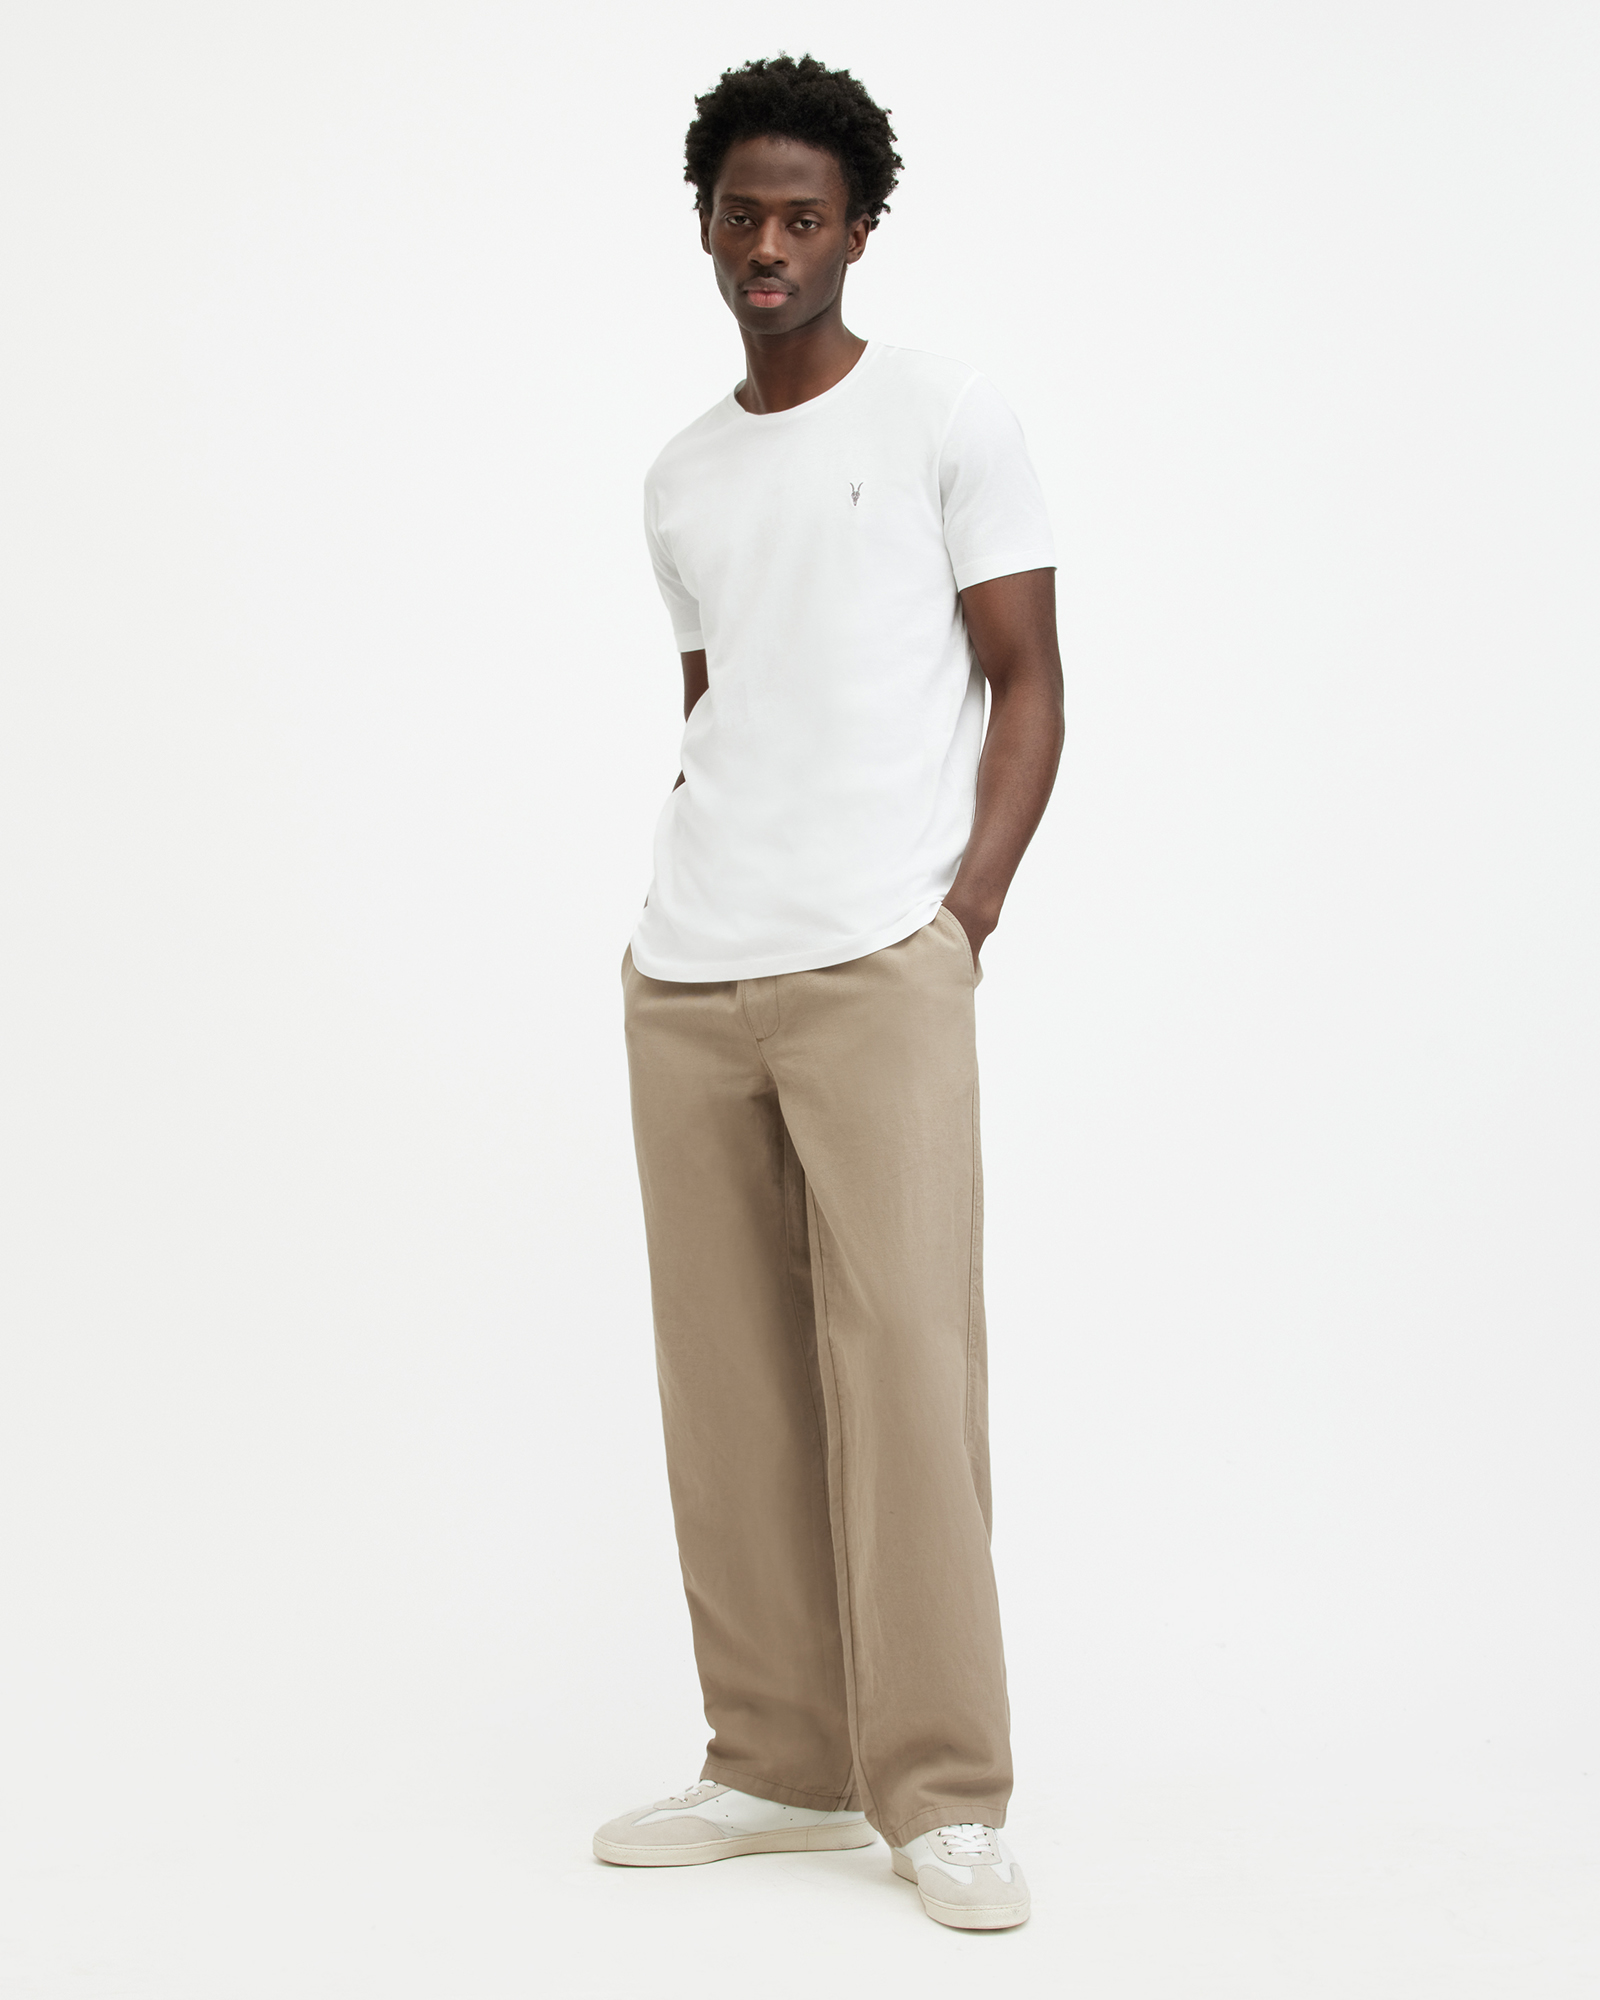 AllSaints Men's Cotton Tonic Crew T-Shirt 3 Pack, White, Black and Grey, Size: XXL